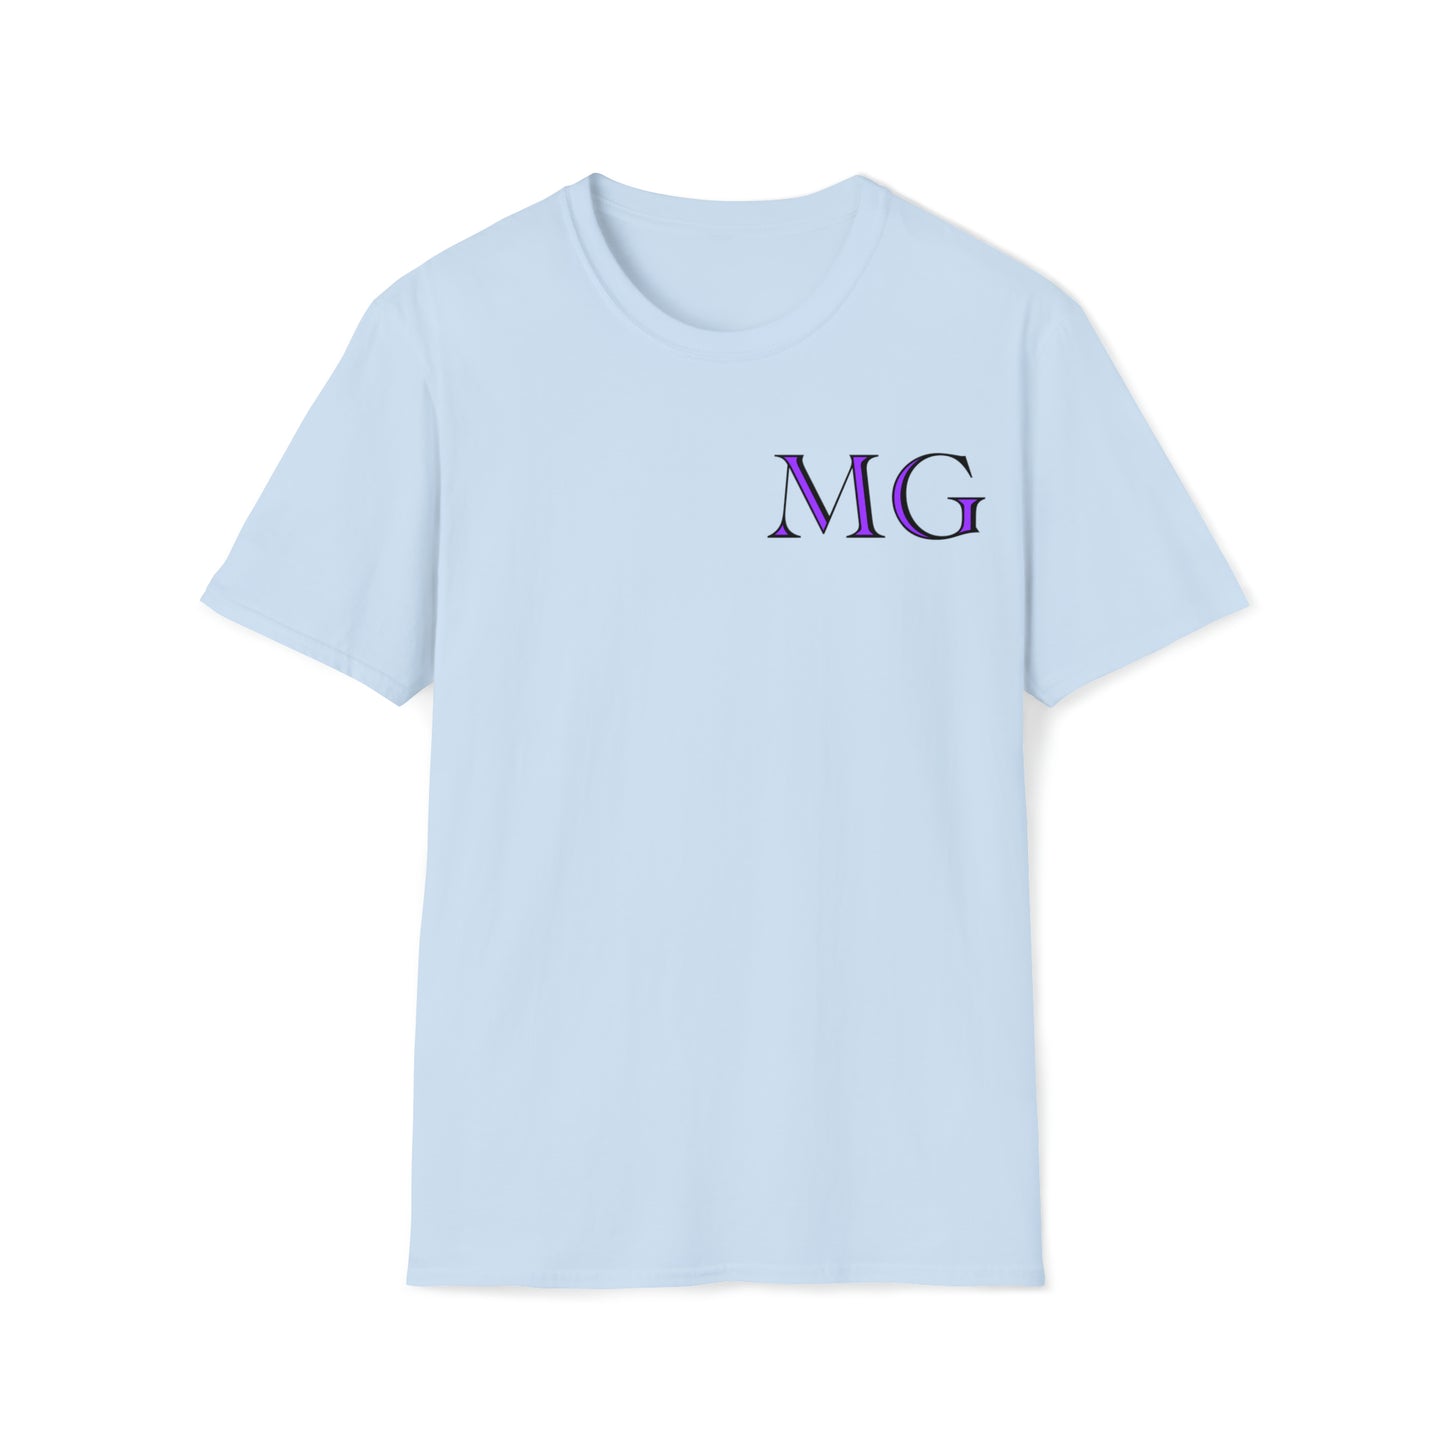 Classic MG Shirt